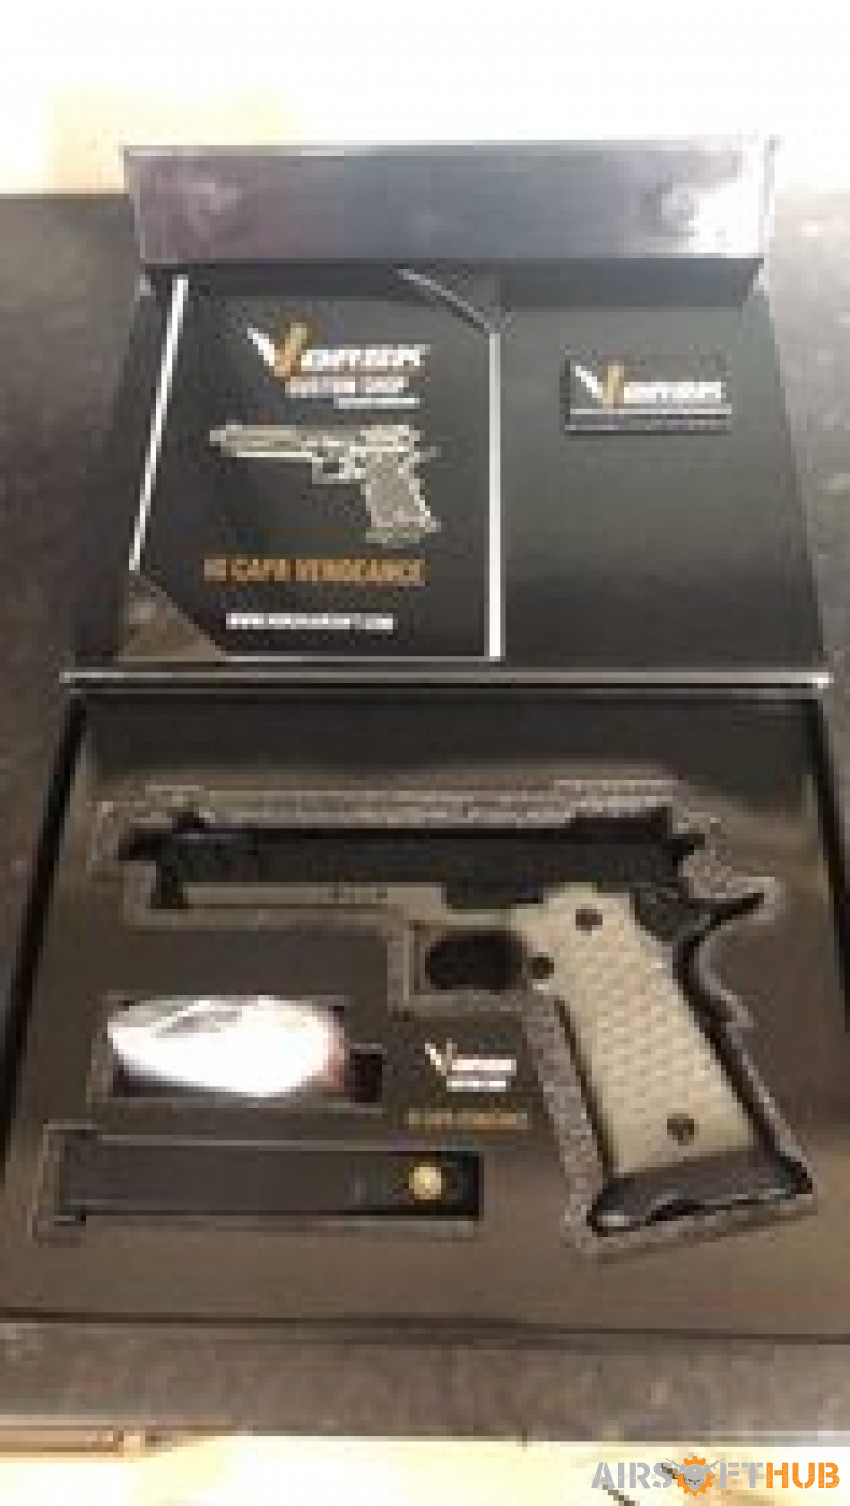 vorsk vengence pistol - Used airsoft equipment